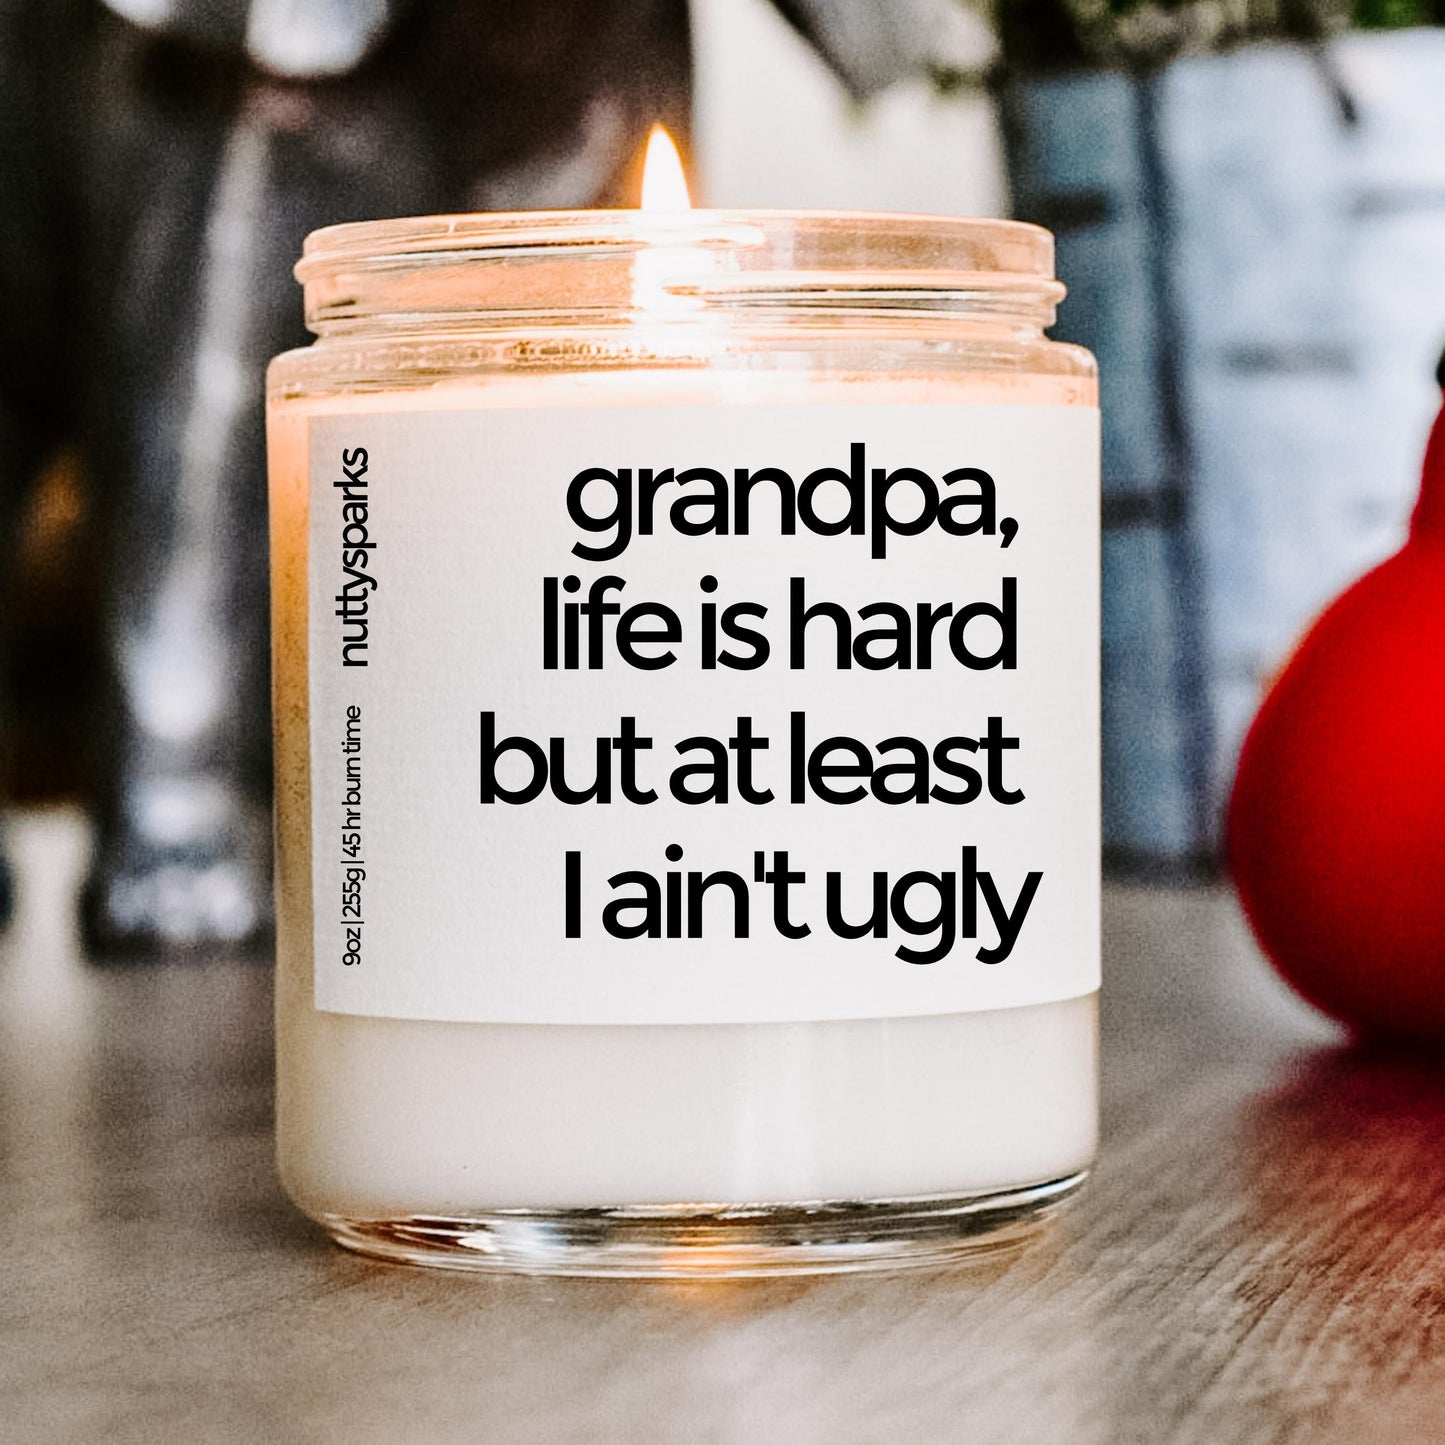 grandpa, life is hard